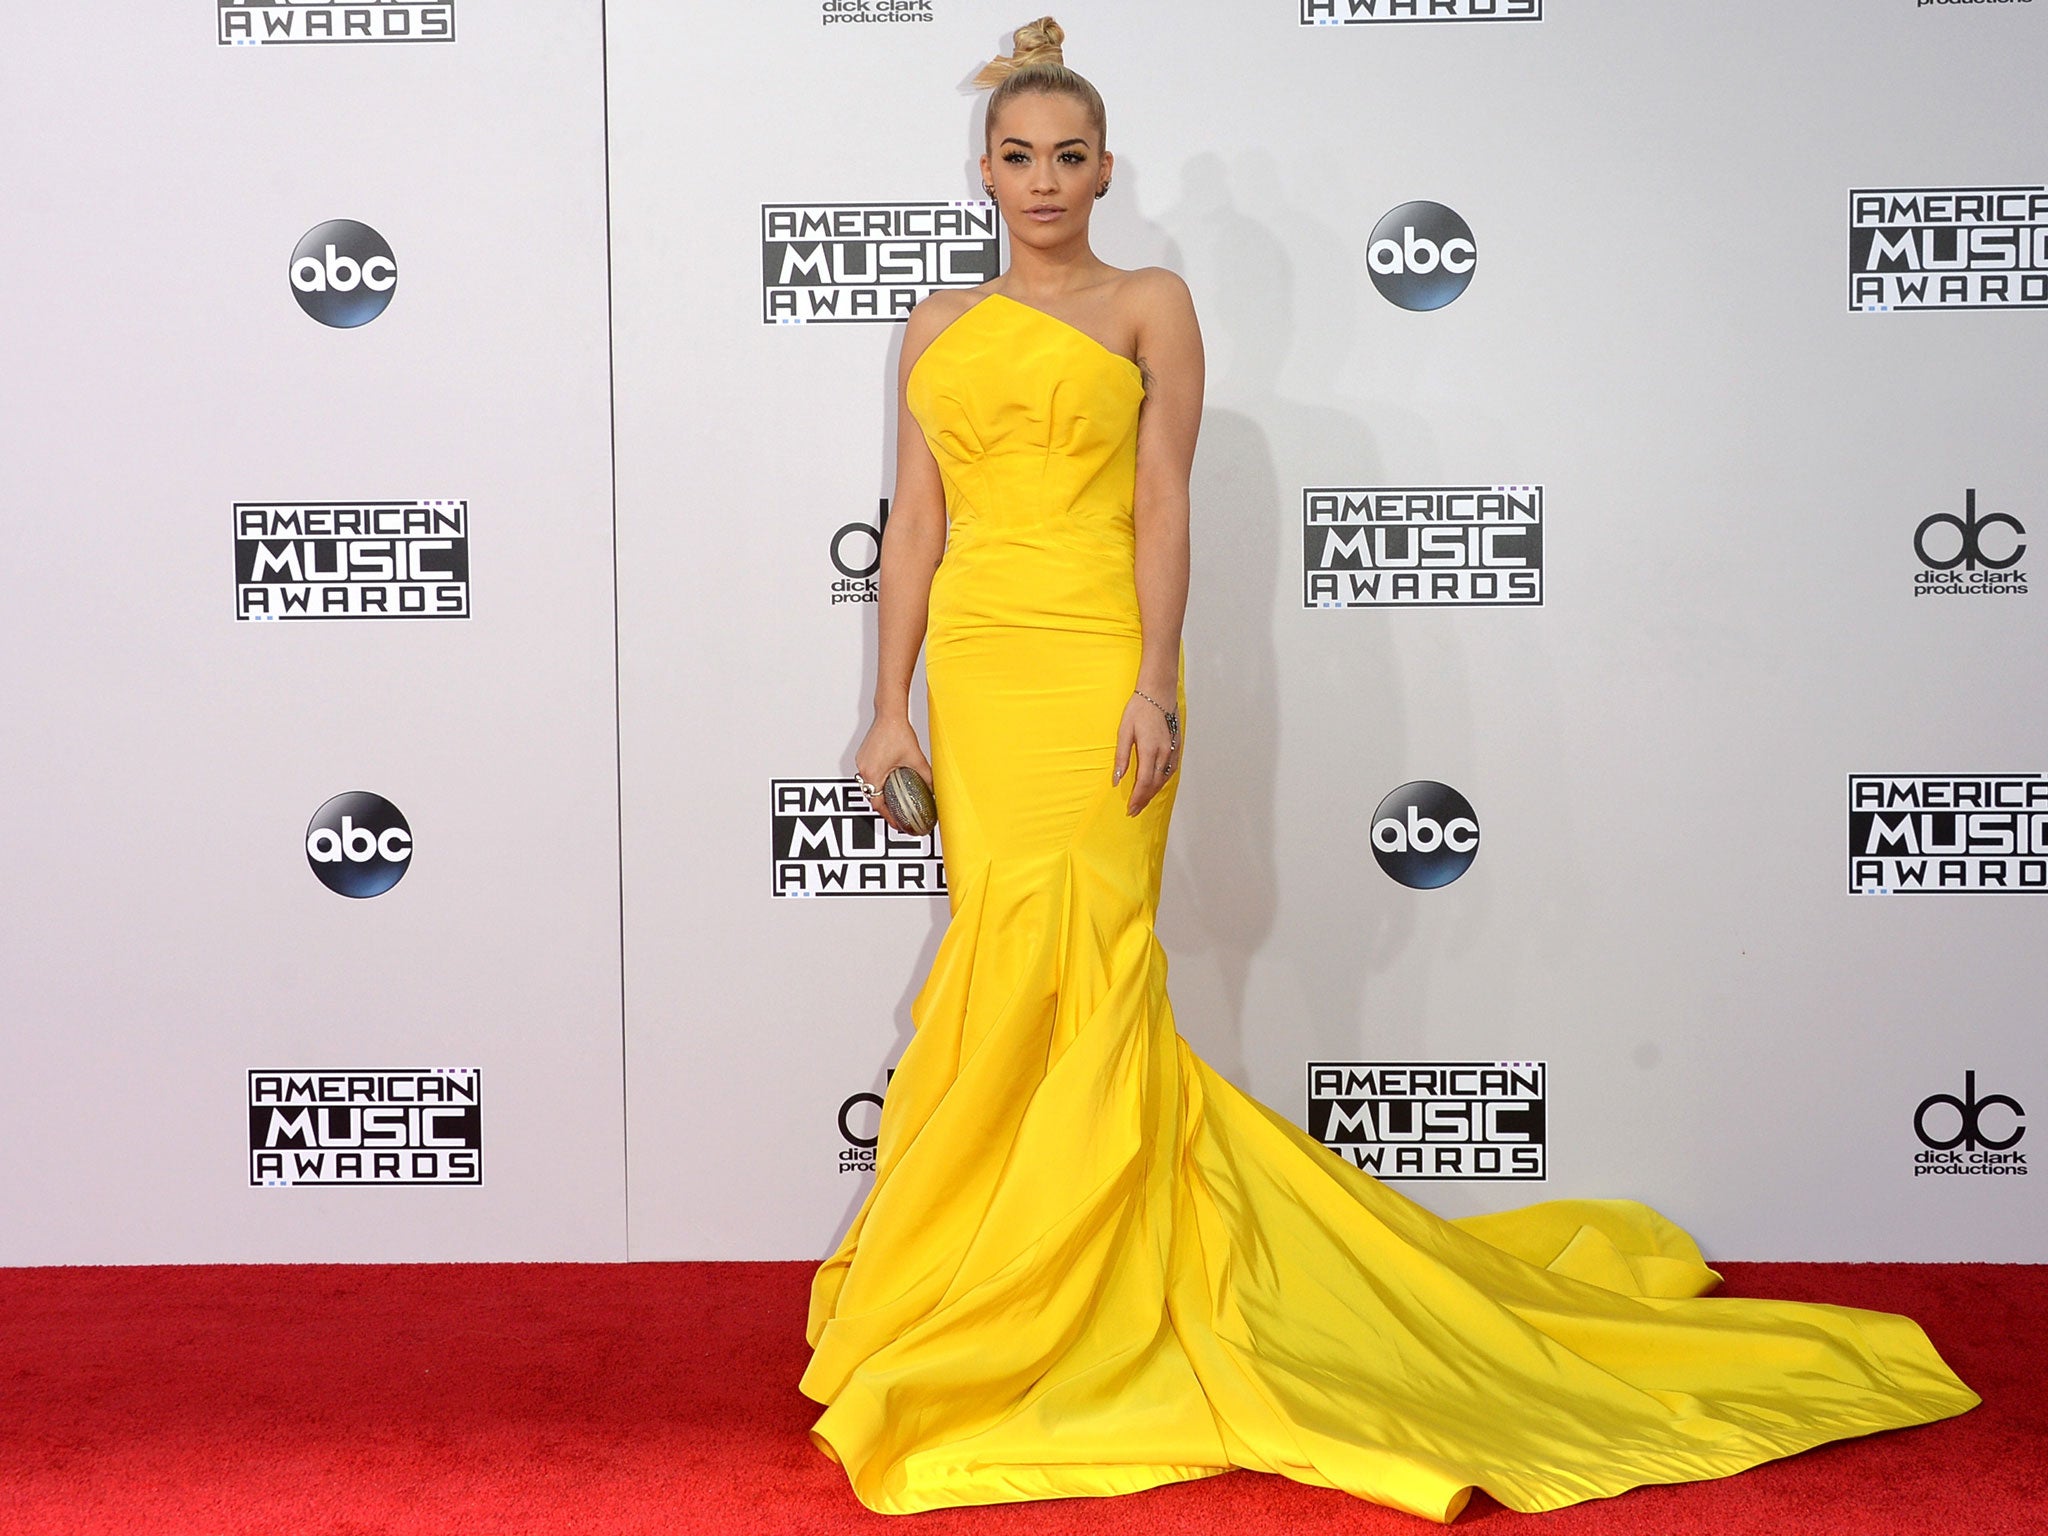 British pop star Rita Ora lighted the red carpet in her bright yellow Zac Posen number